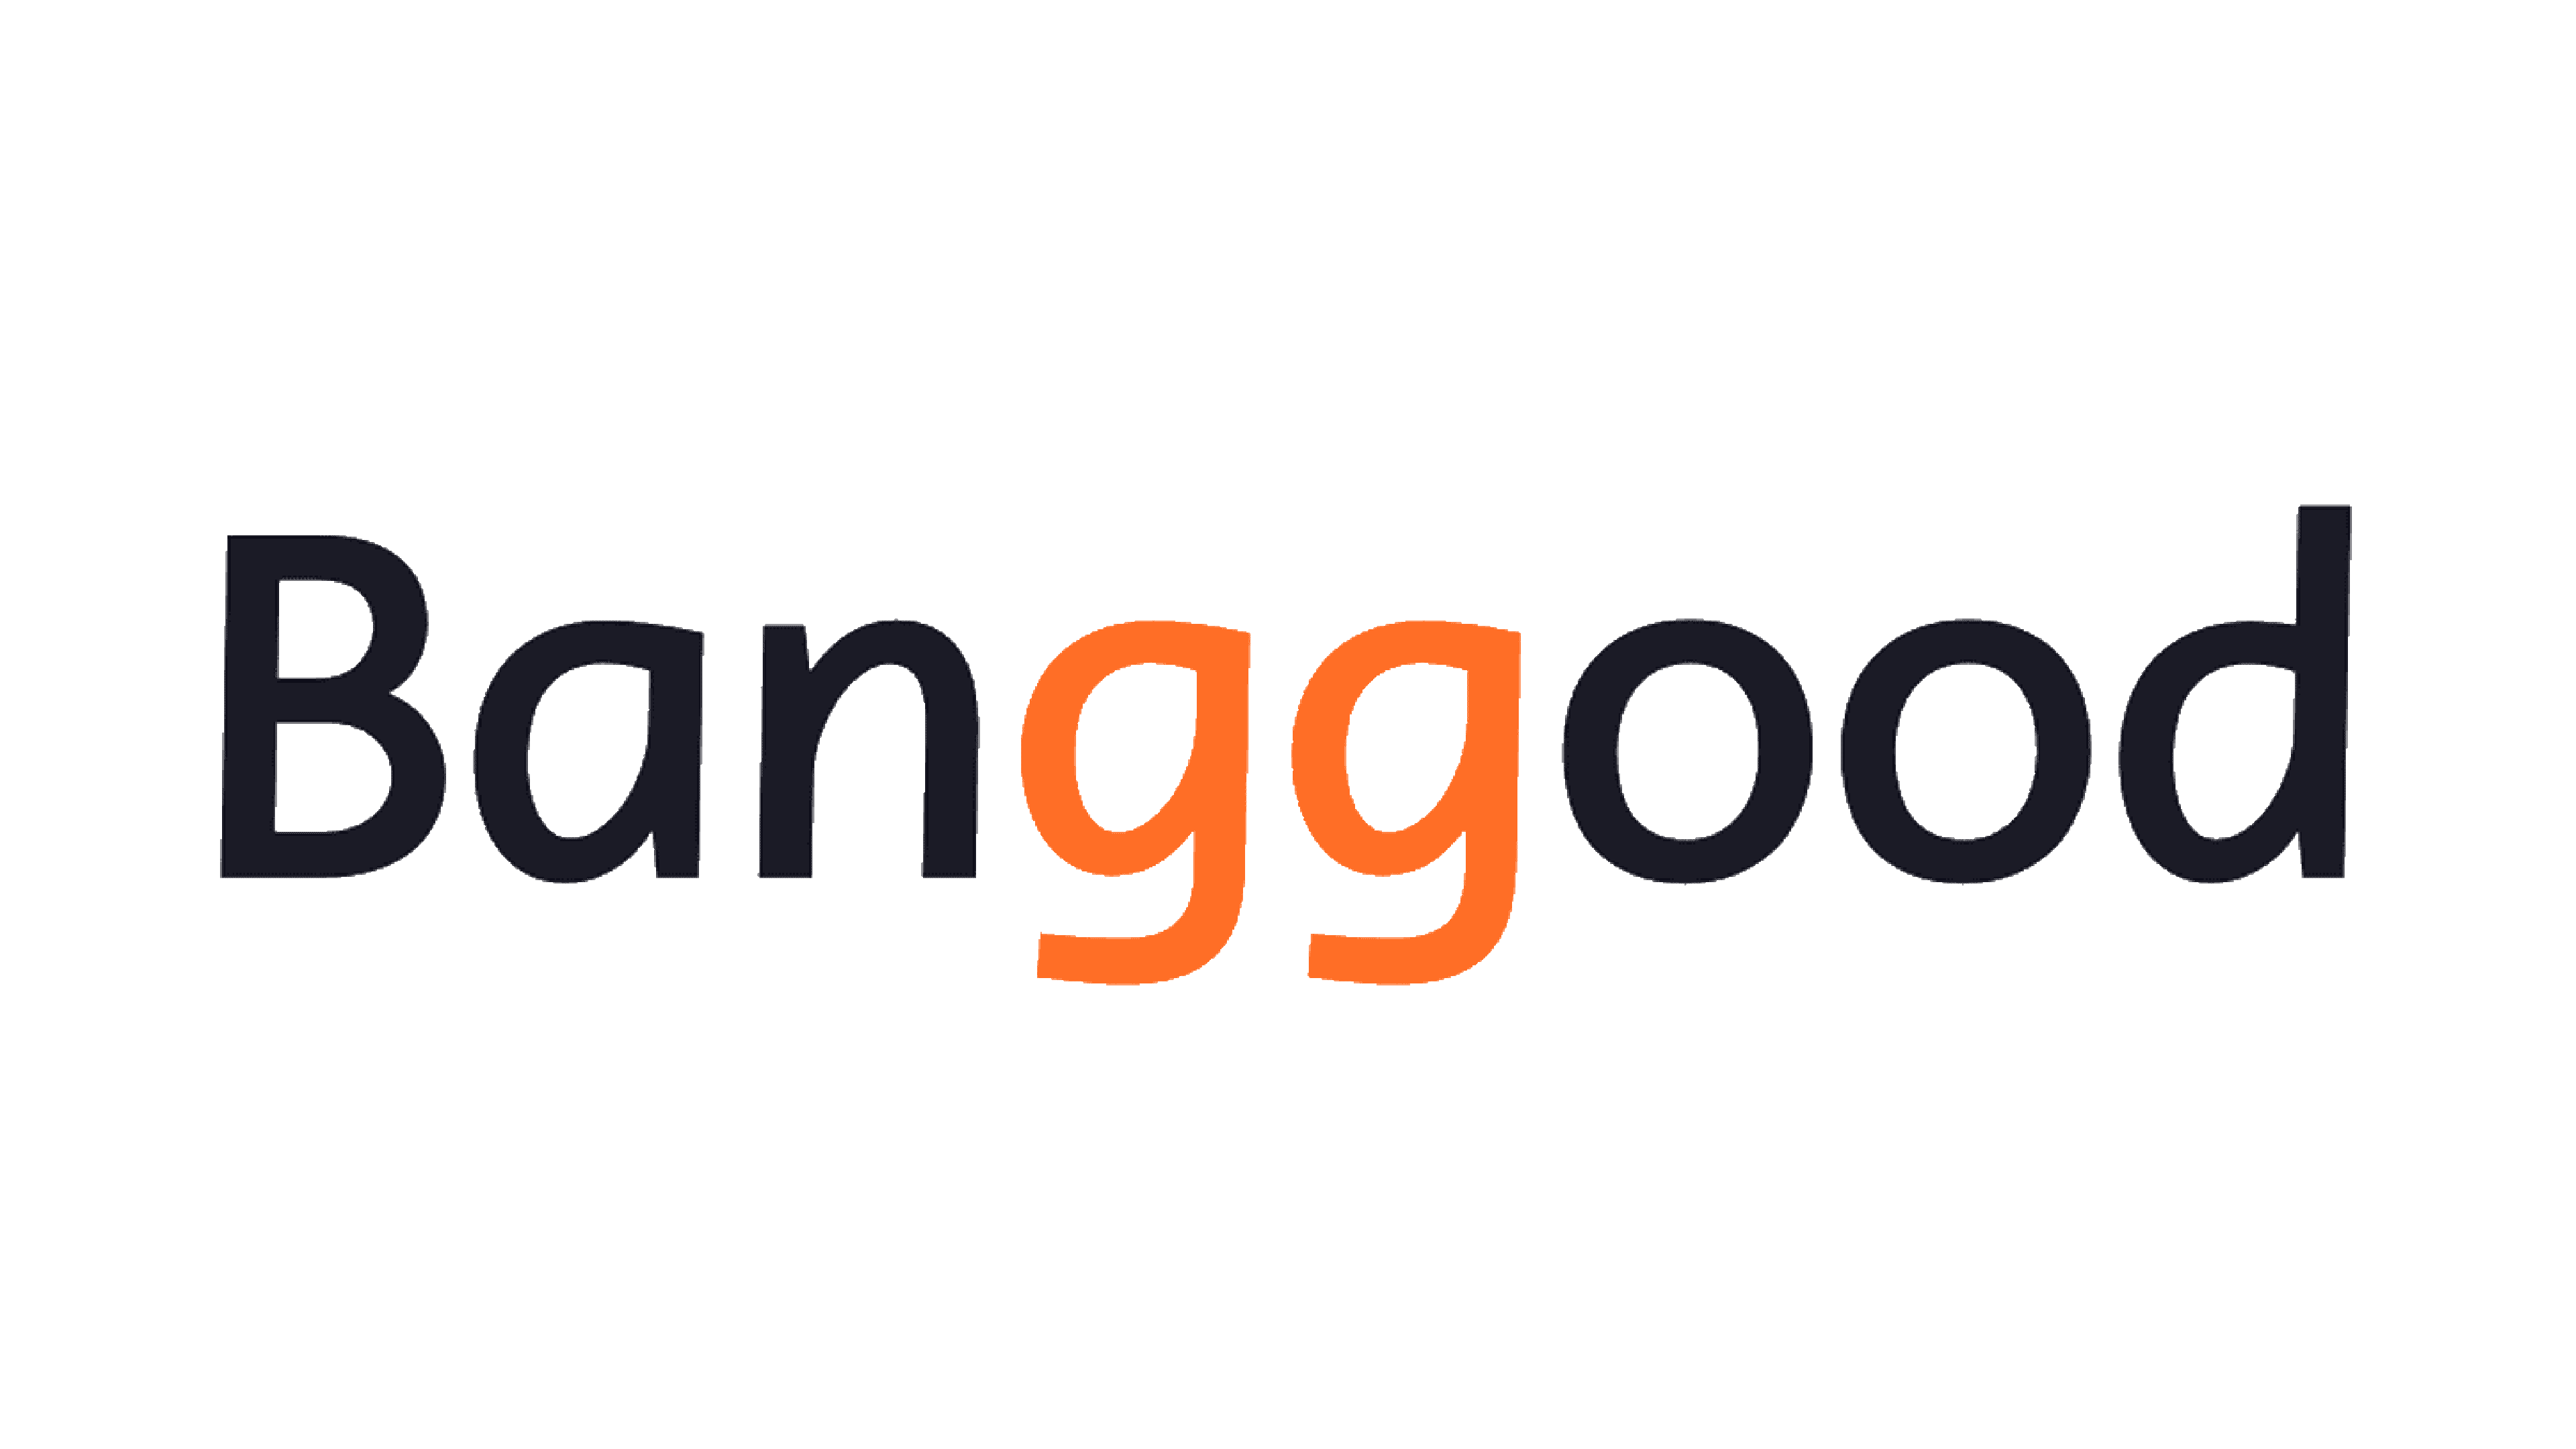 Banggood Coupon Codes